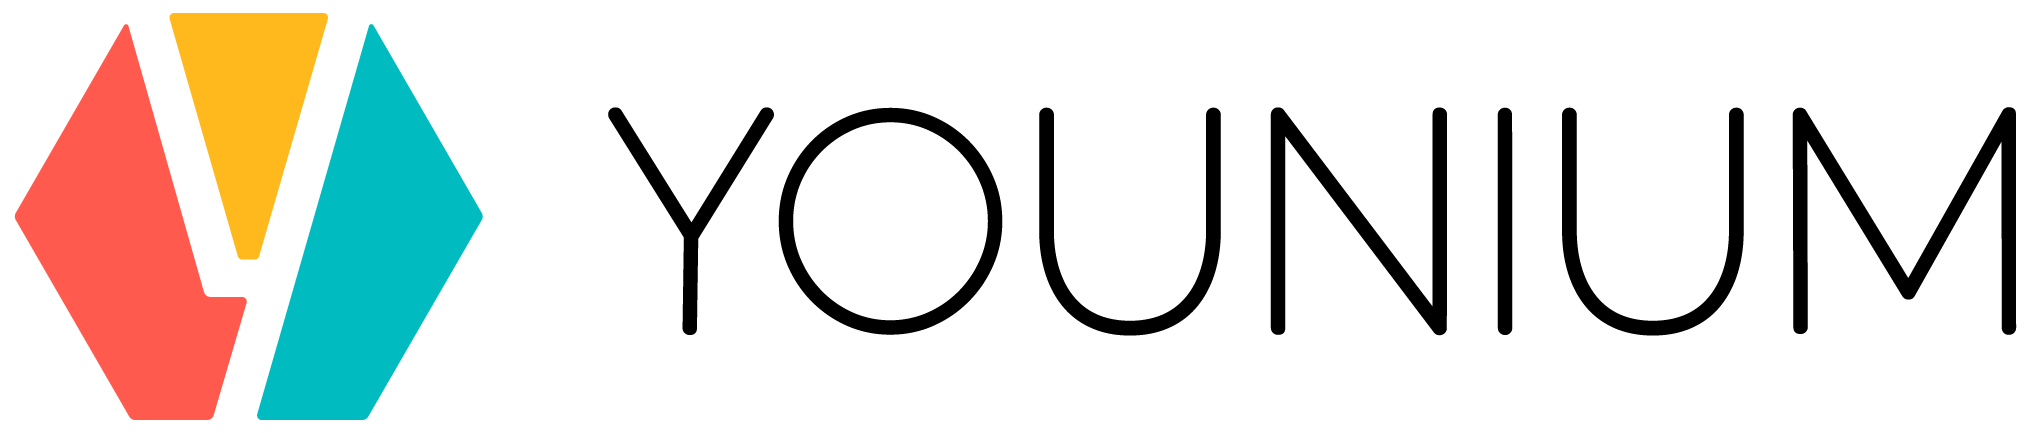 Younium's logo